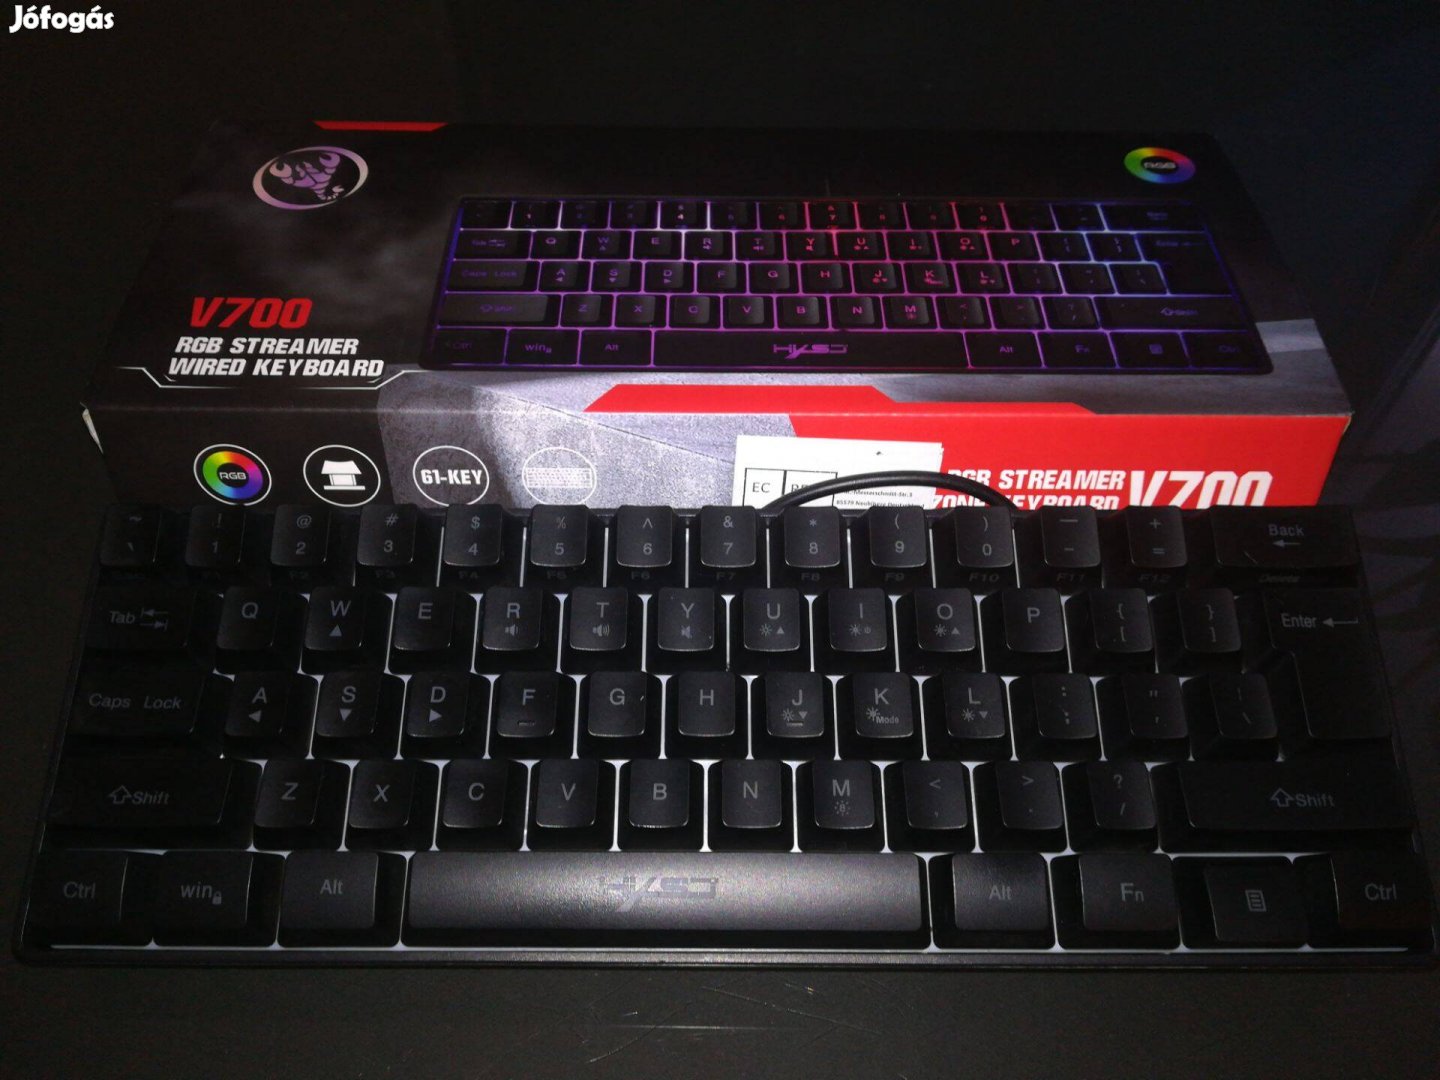 Eladó billentyűzet!!! V700 RGB Streamer wired keyboard